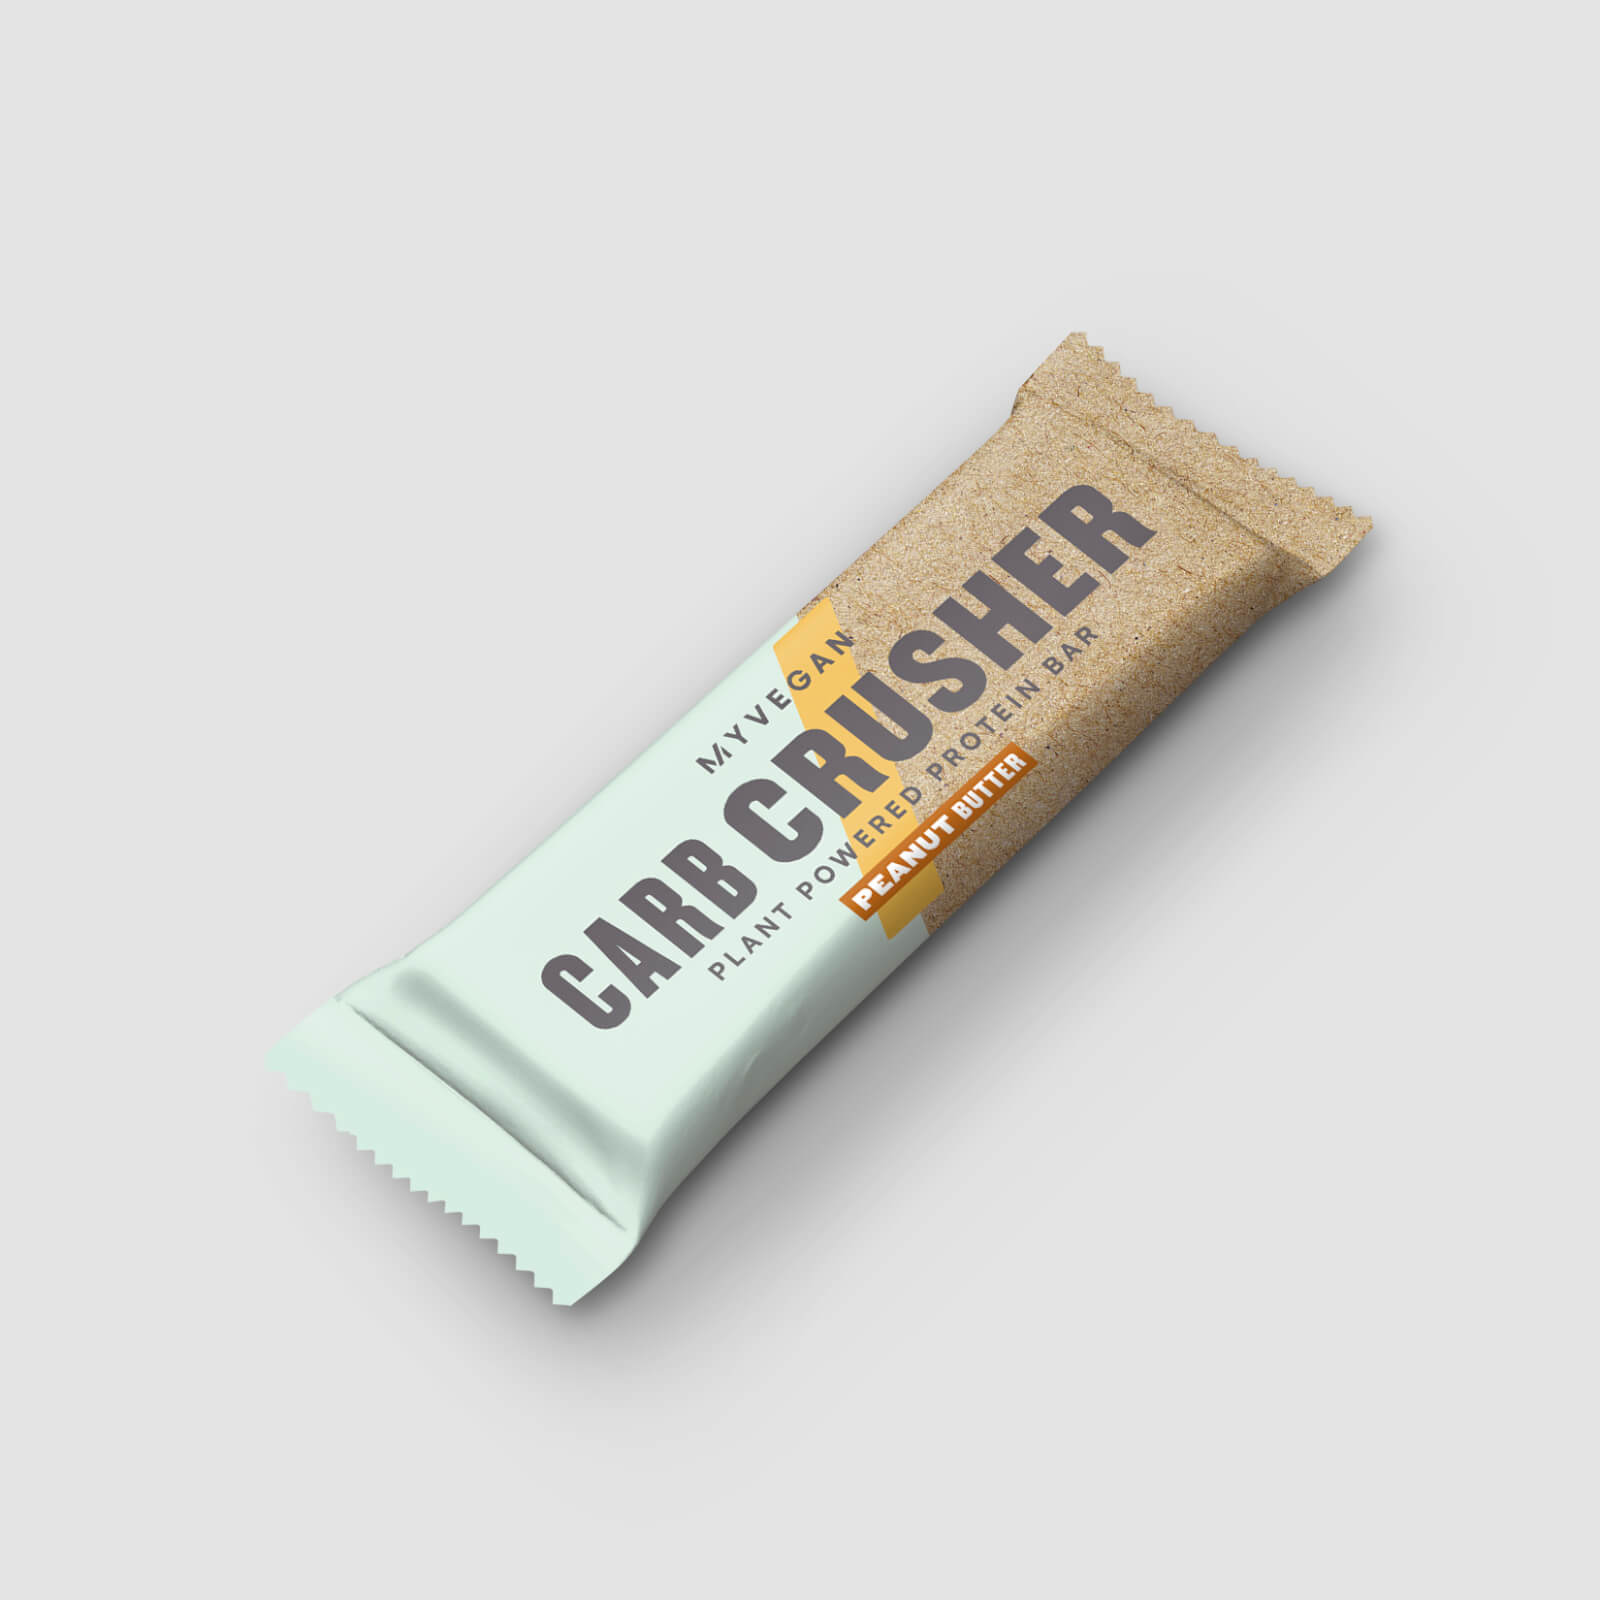 Myprotein Vegan Carb Crusher (Sample) - 60g - Peanut Butter